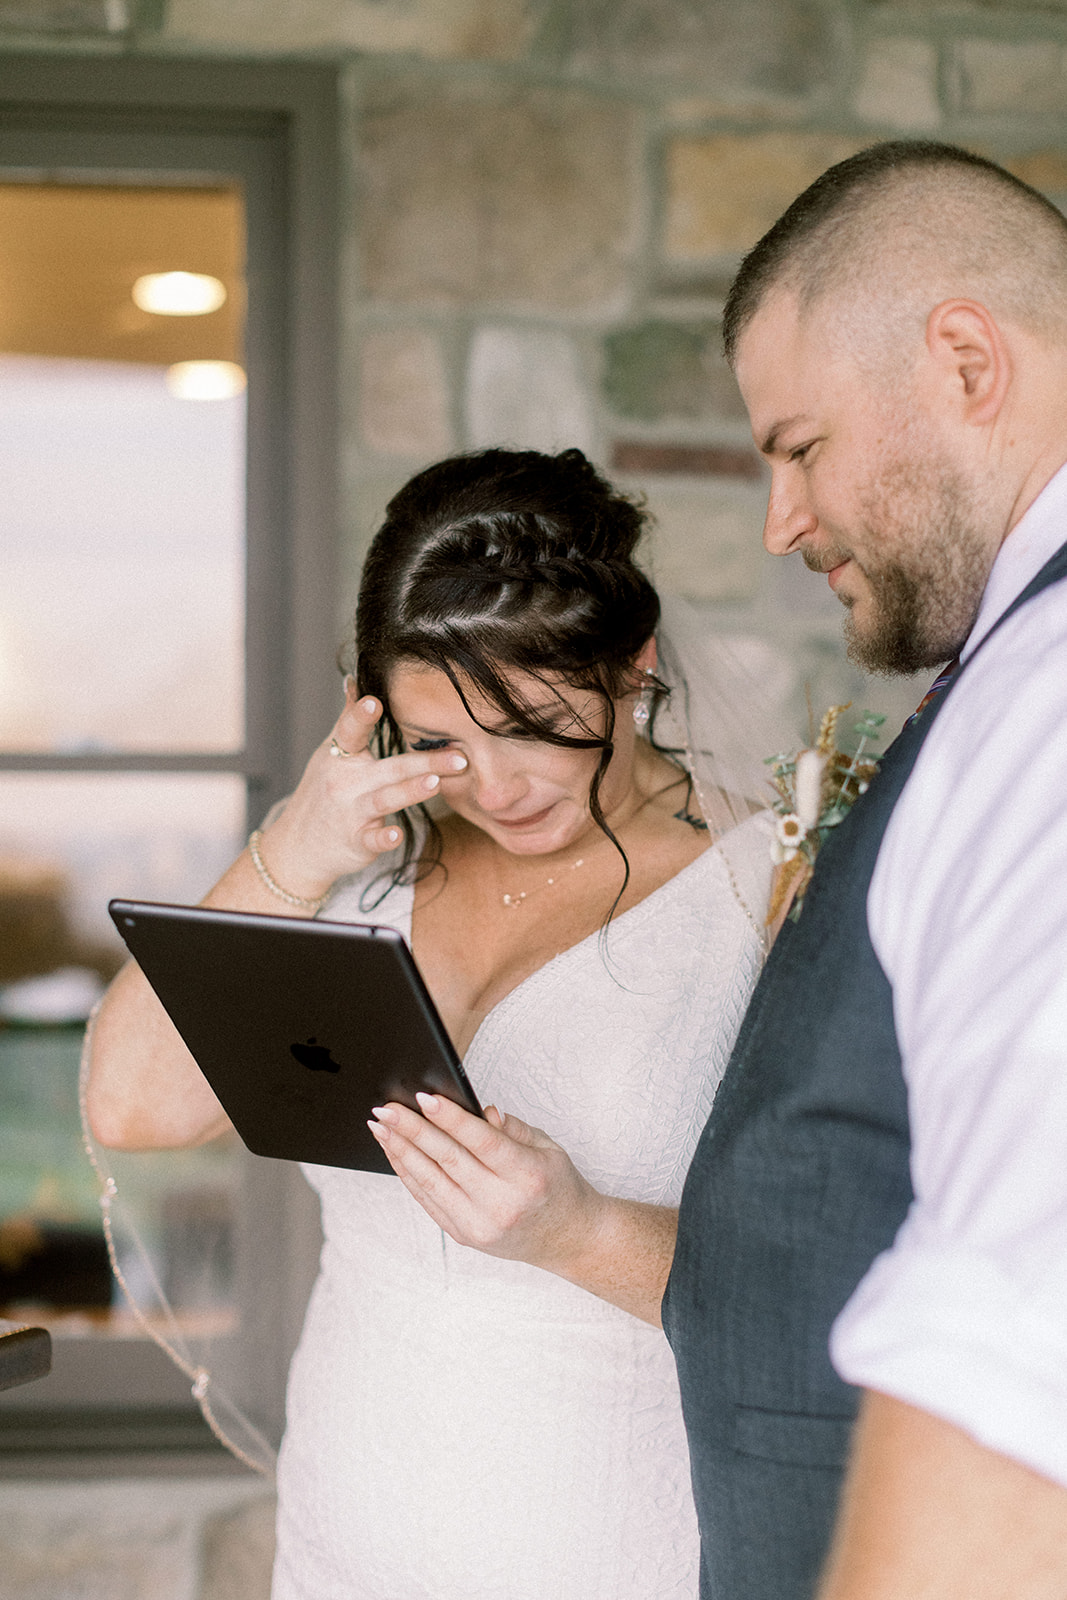 Pennsylvania wedding photographer captures bride crying while holding iPad